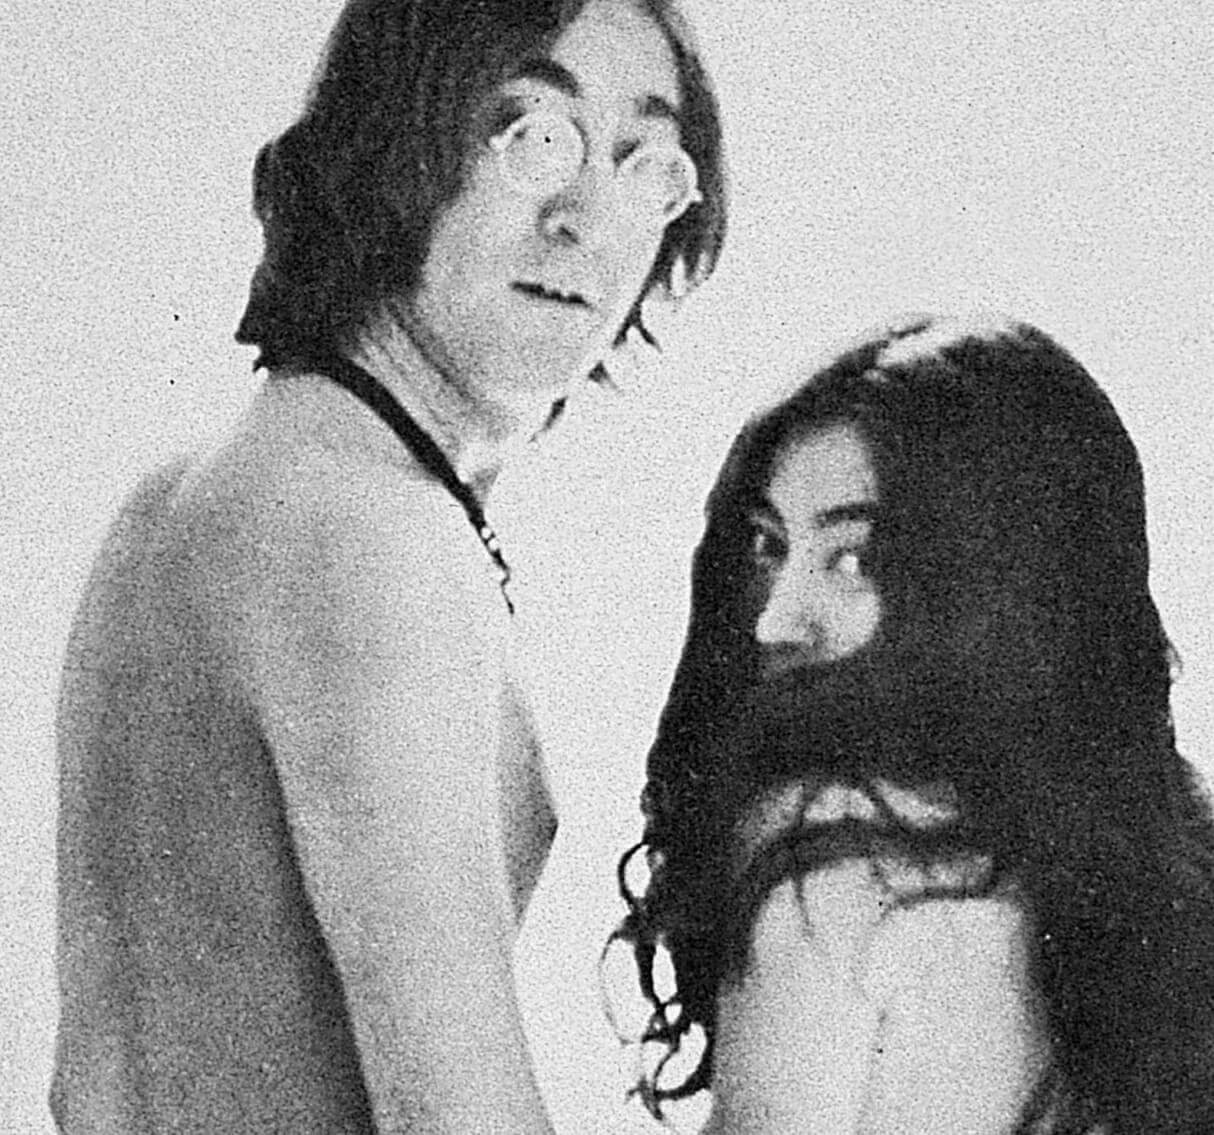 The Beatles' John Lennon and Yoko Ono in black-and-white